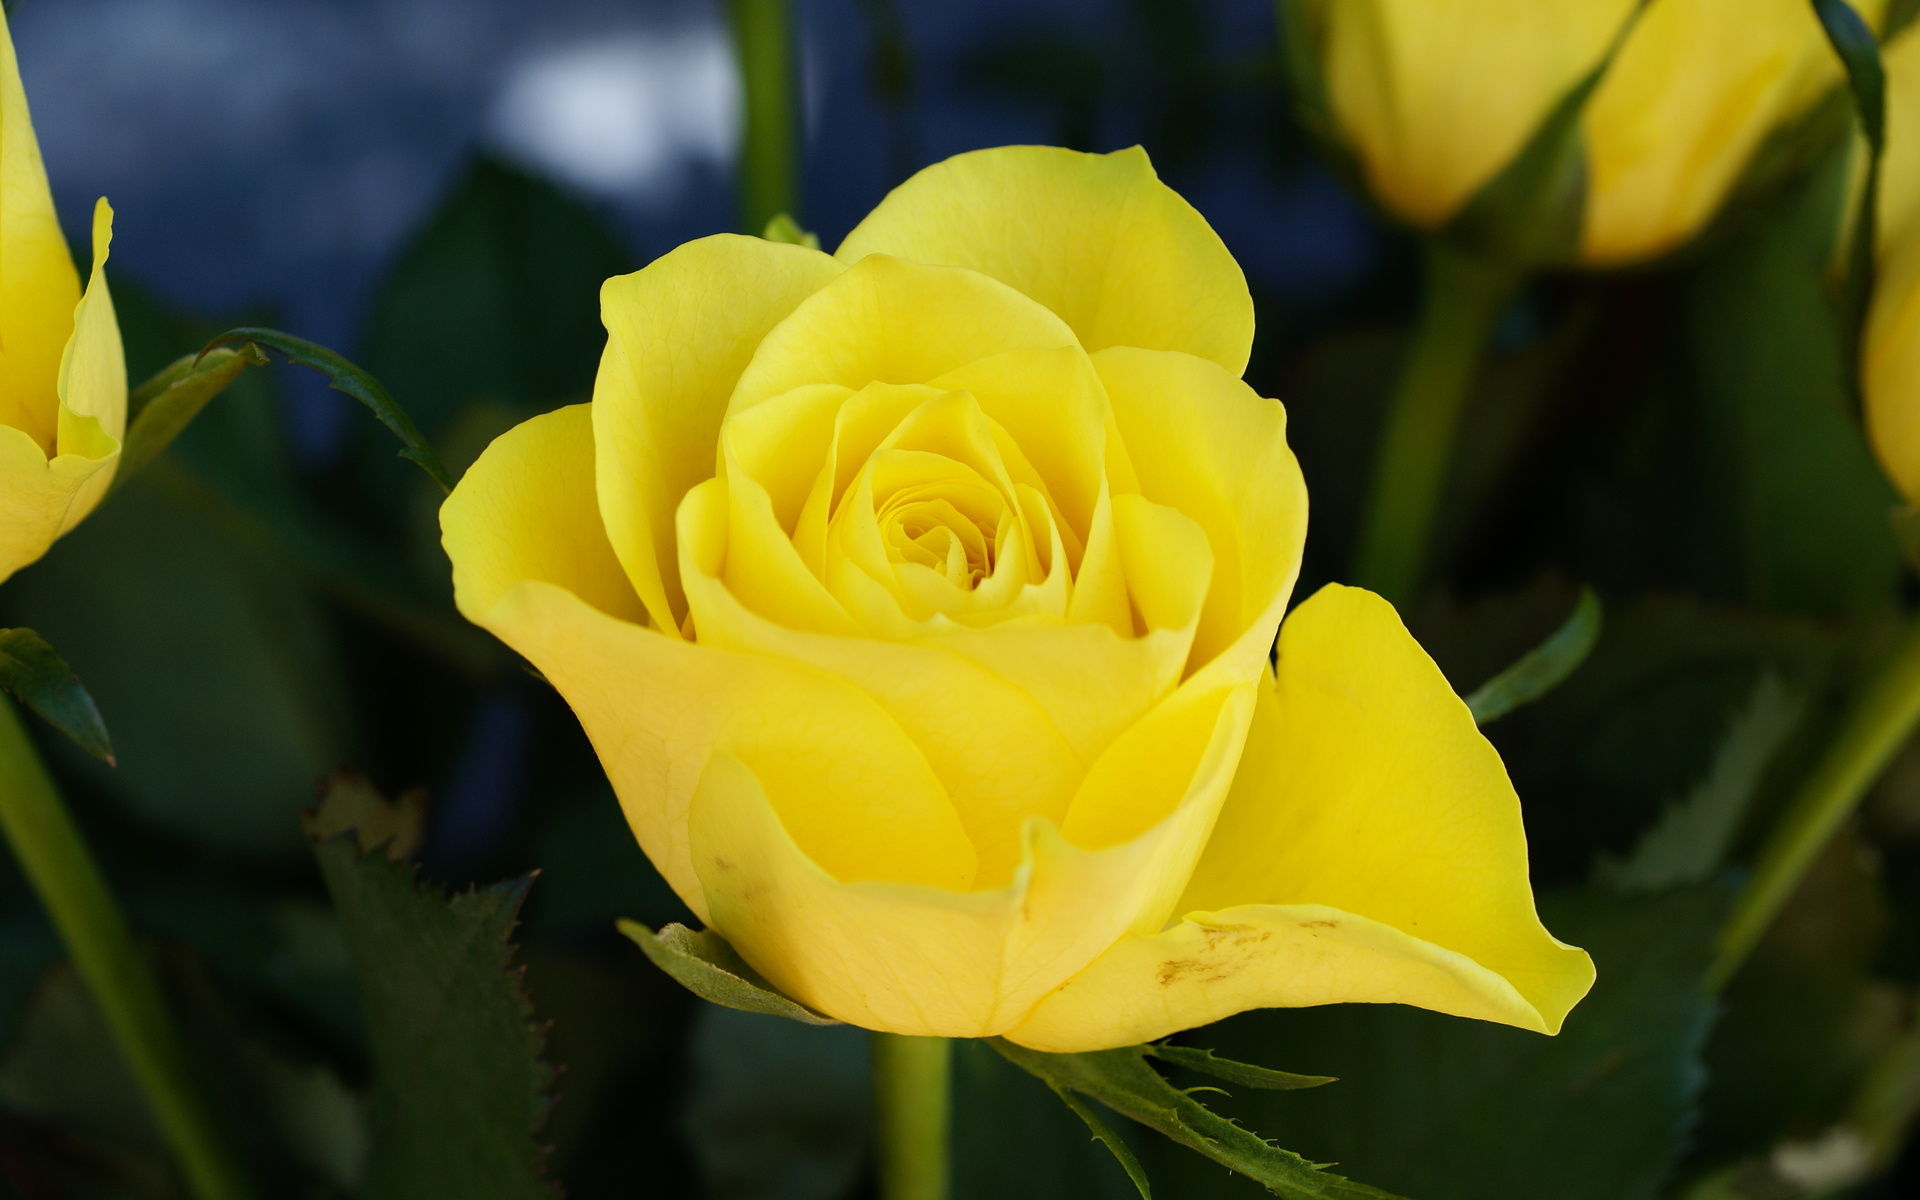 Чайно гибридная роза желтая магия фото